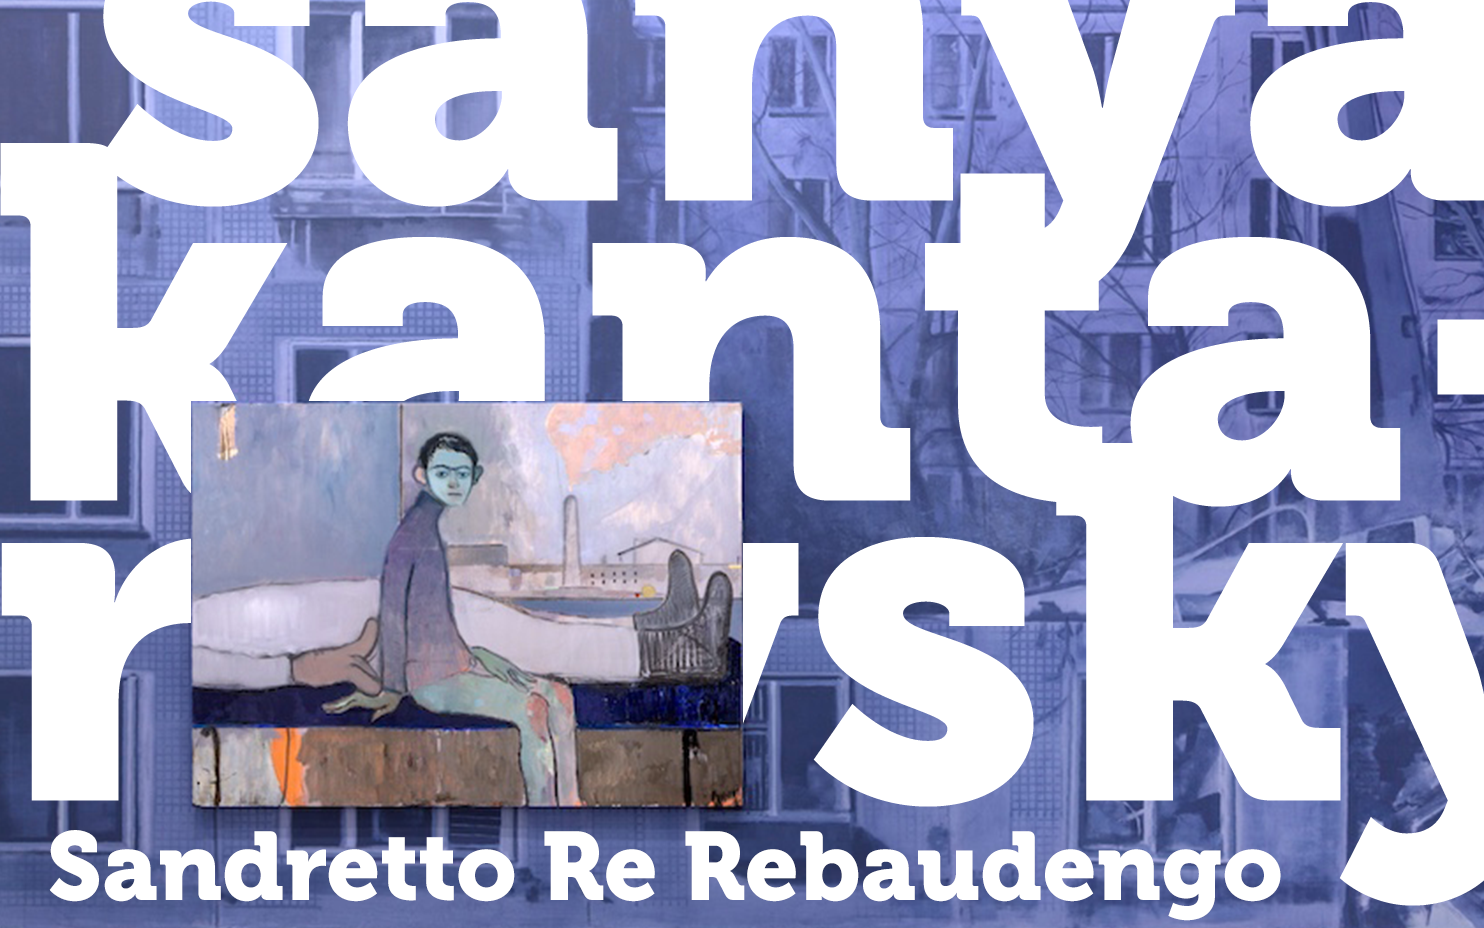 Sanya Kantarovsky. “Letdown” in mostra alla Sandretto Re Rebaudengo